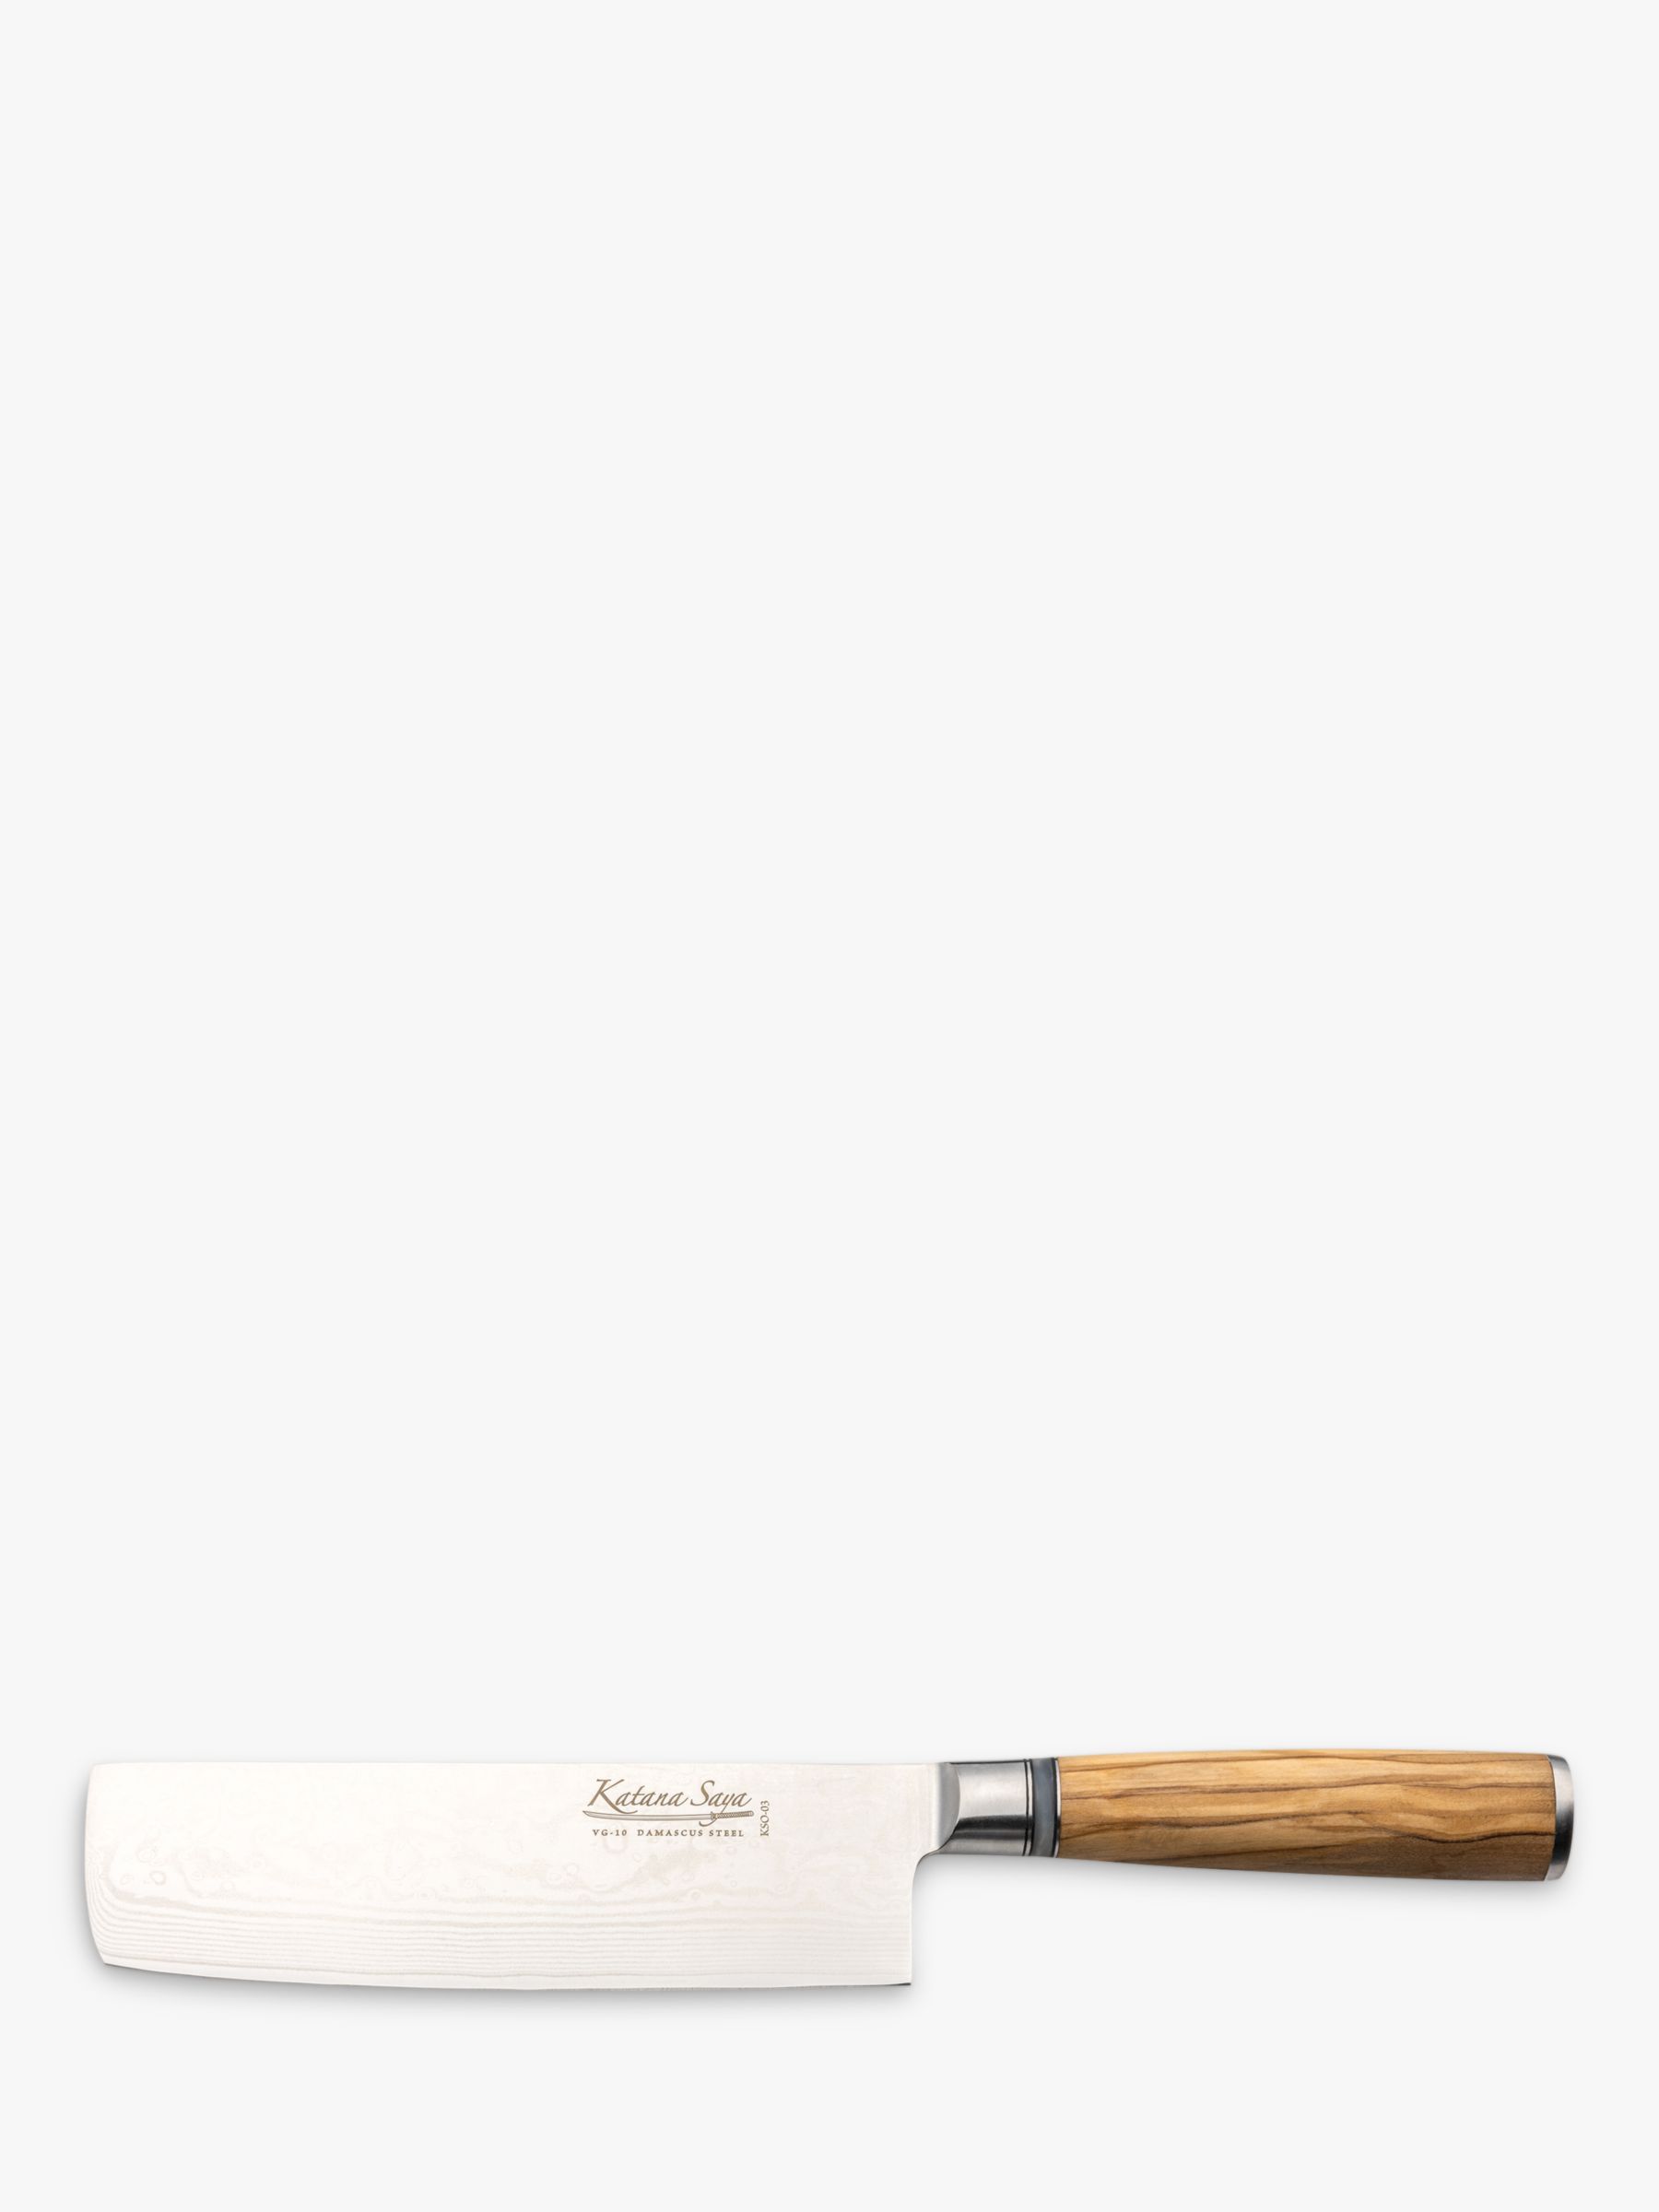 Katana Saya Damascus Steel Nakiri Kitchen Knife with Olive Handle & Wooden Sheath, 18cm